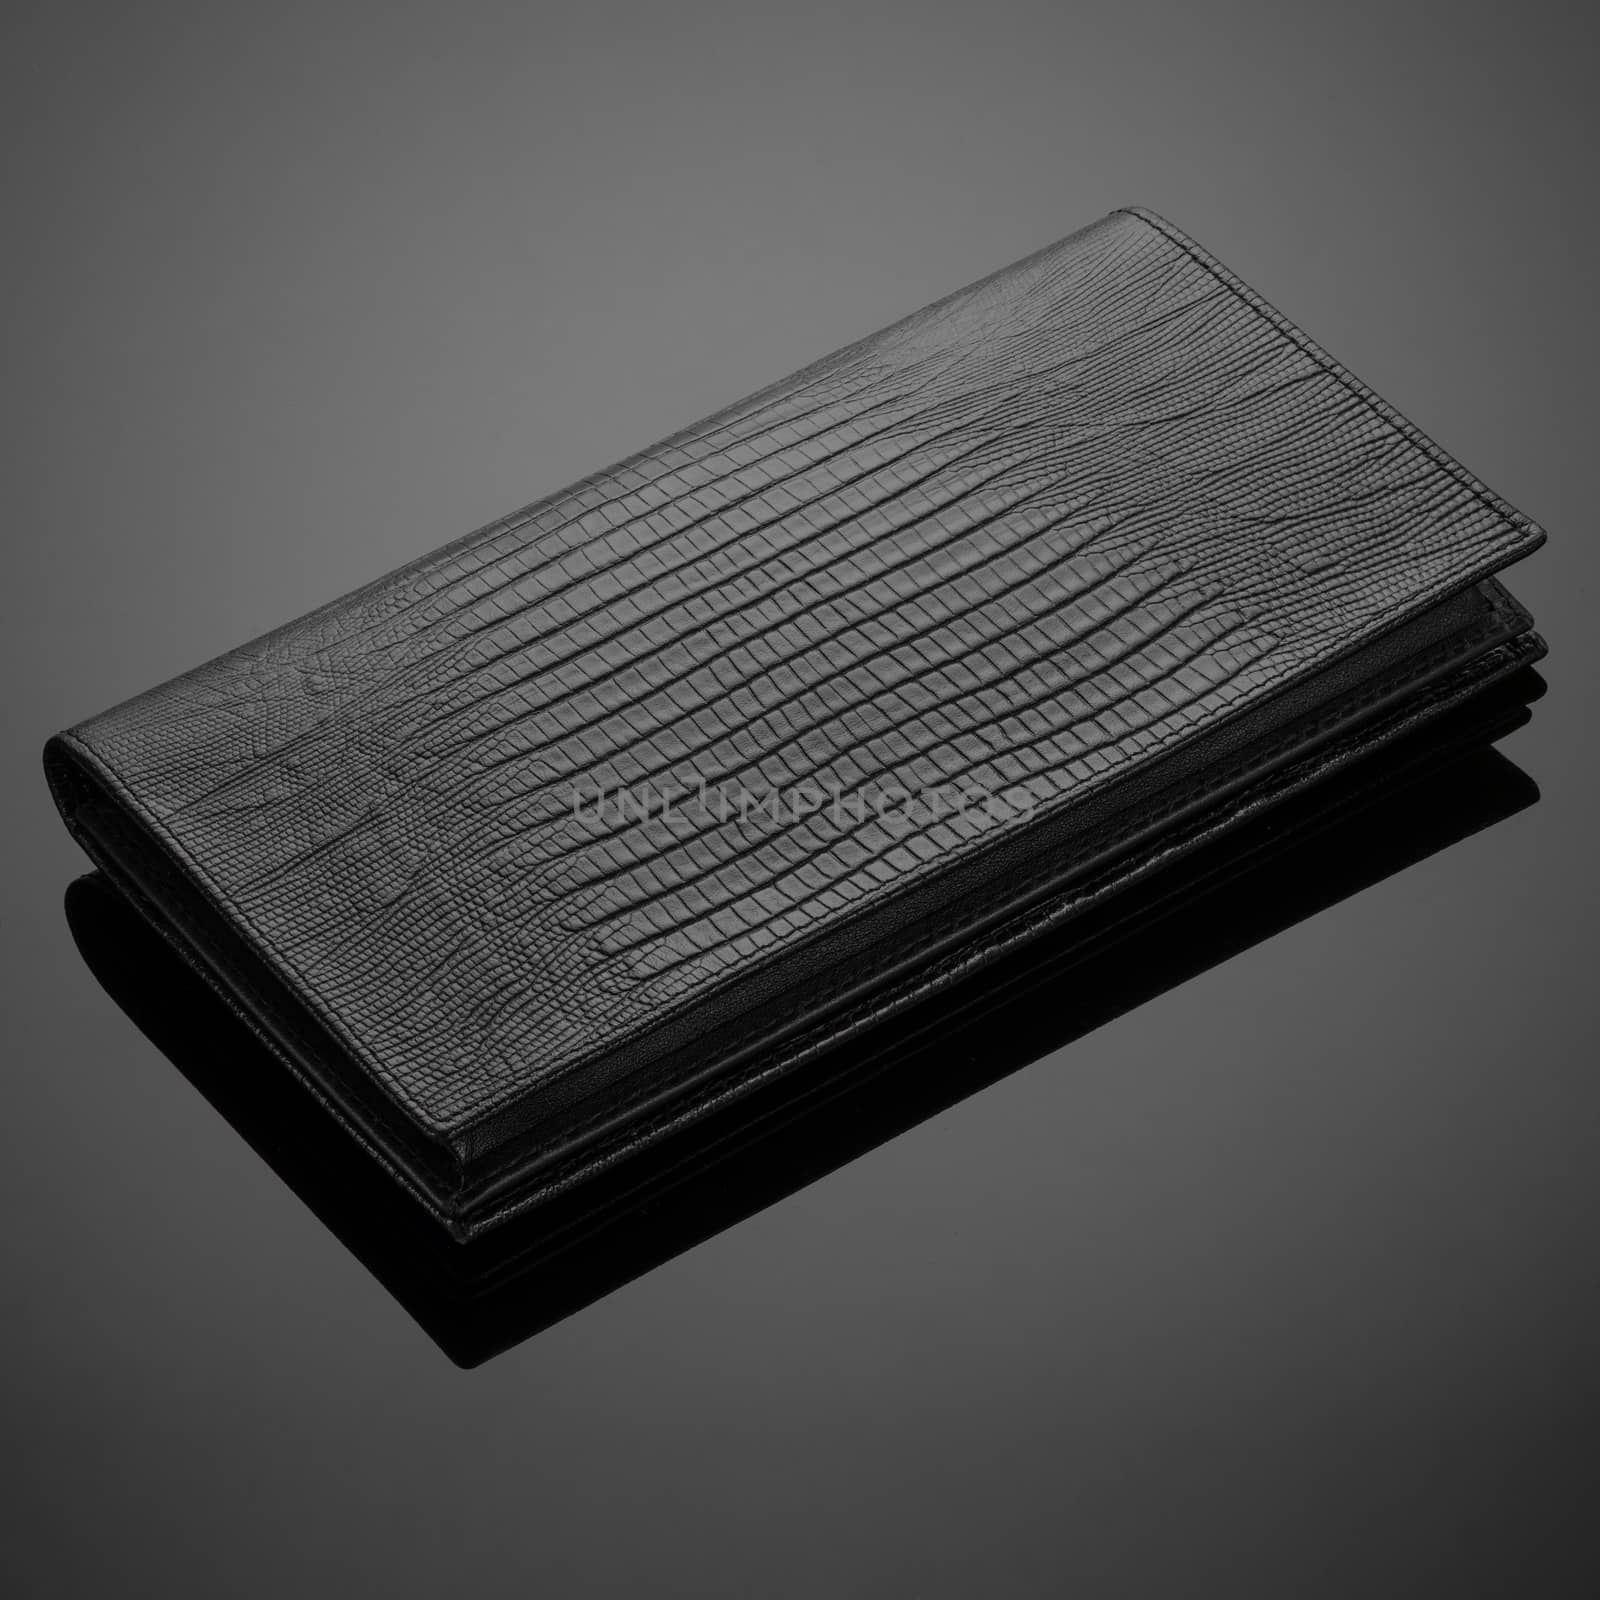 men's wallet on a black background by A_Karim